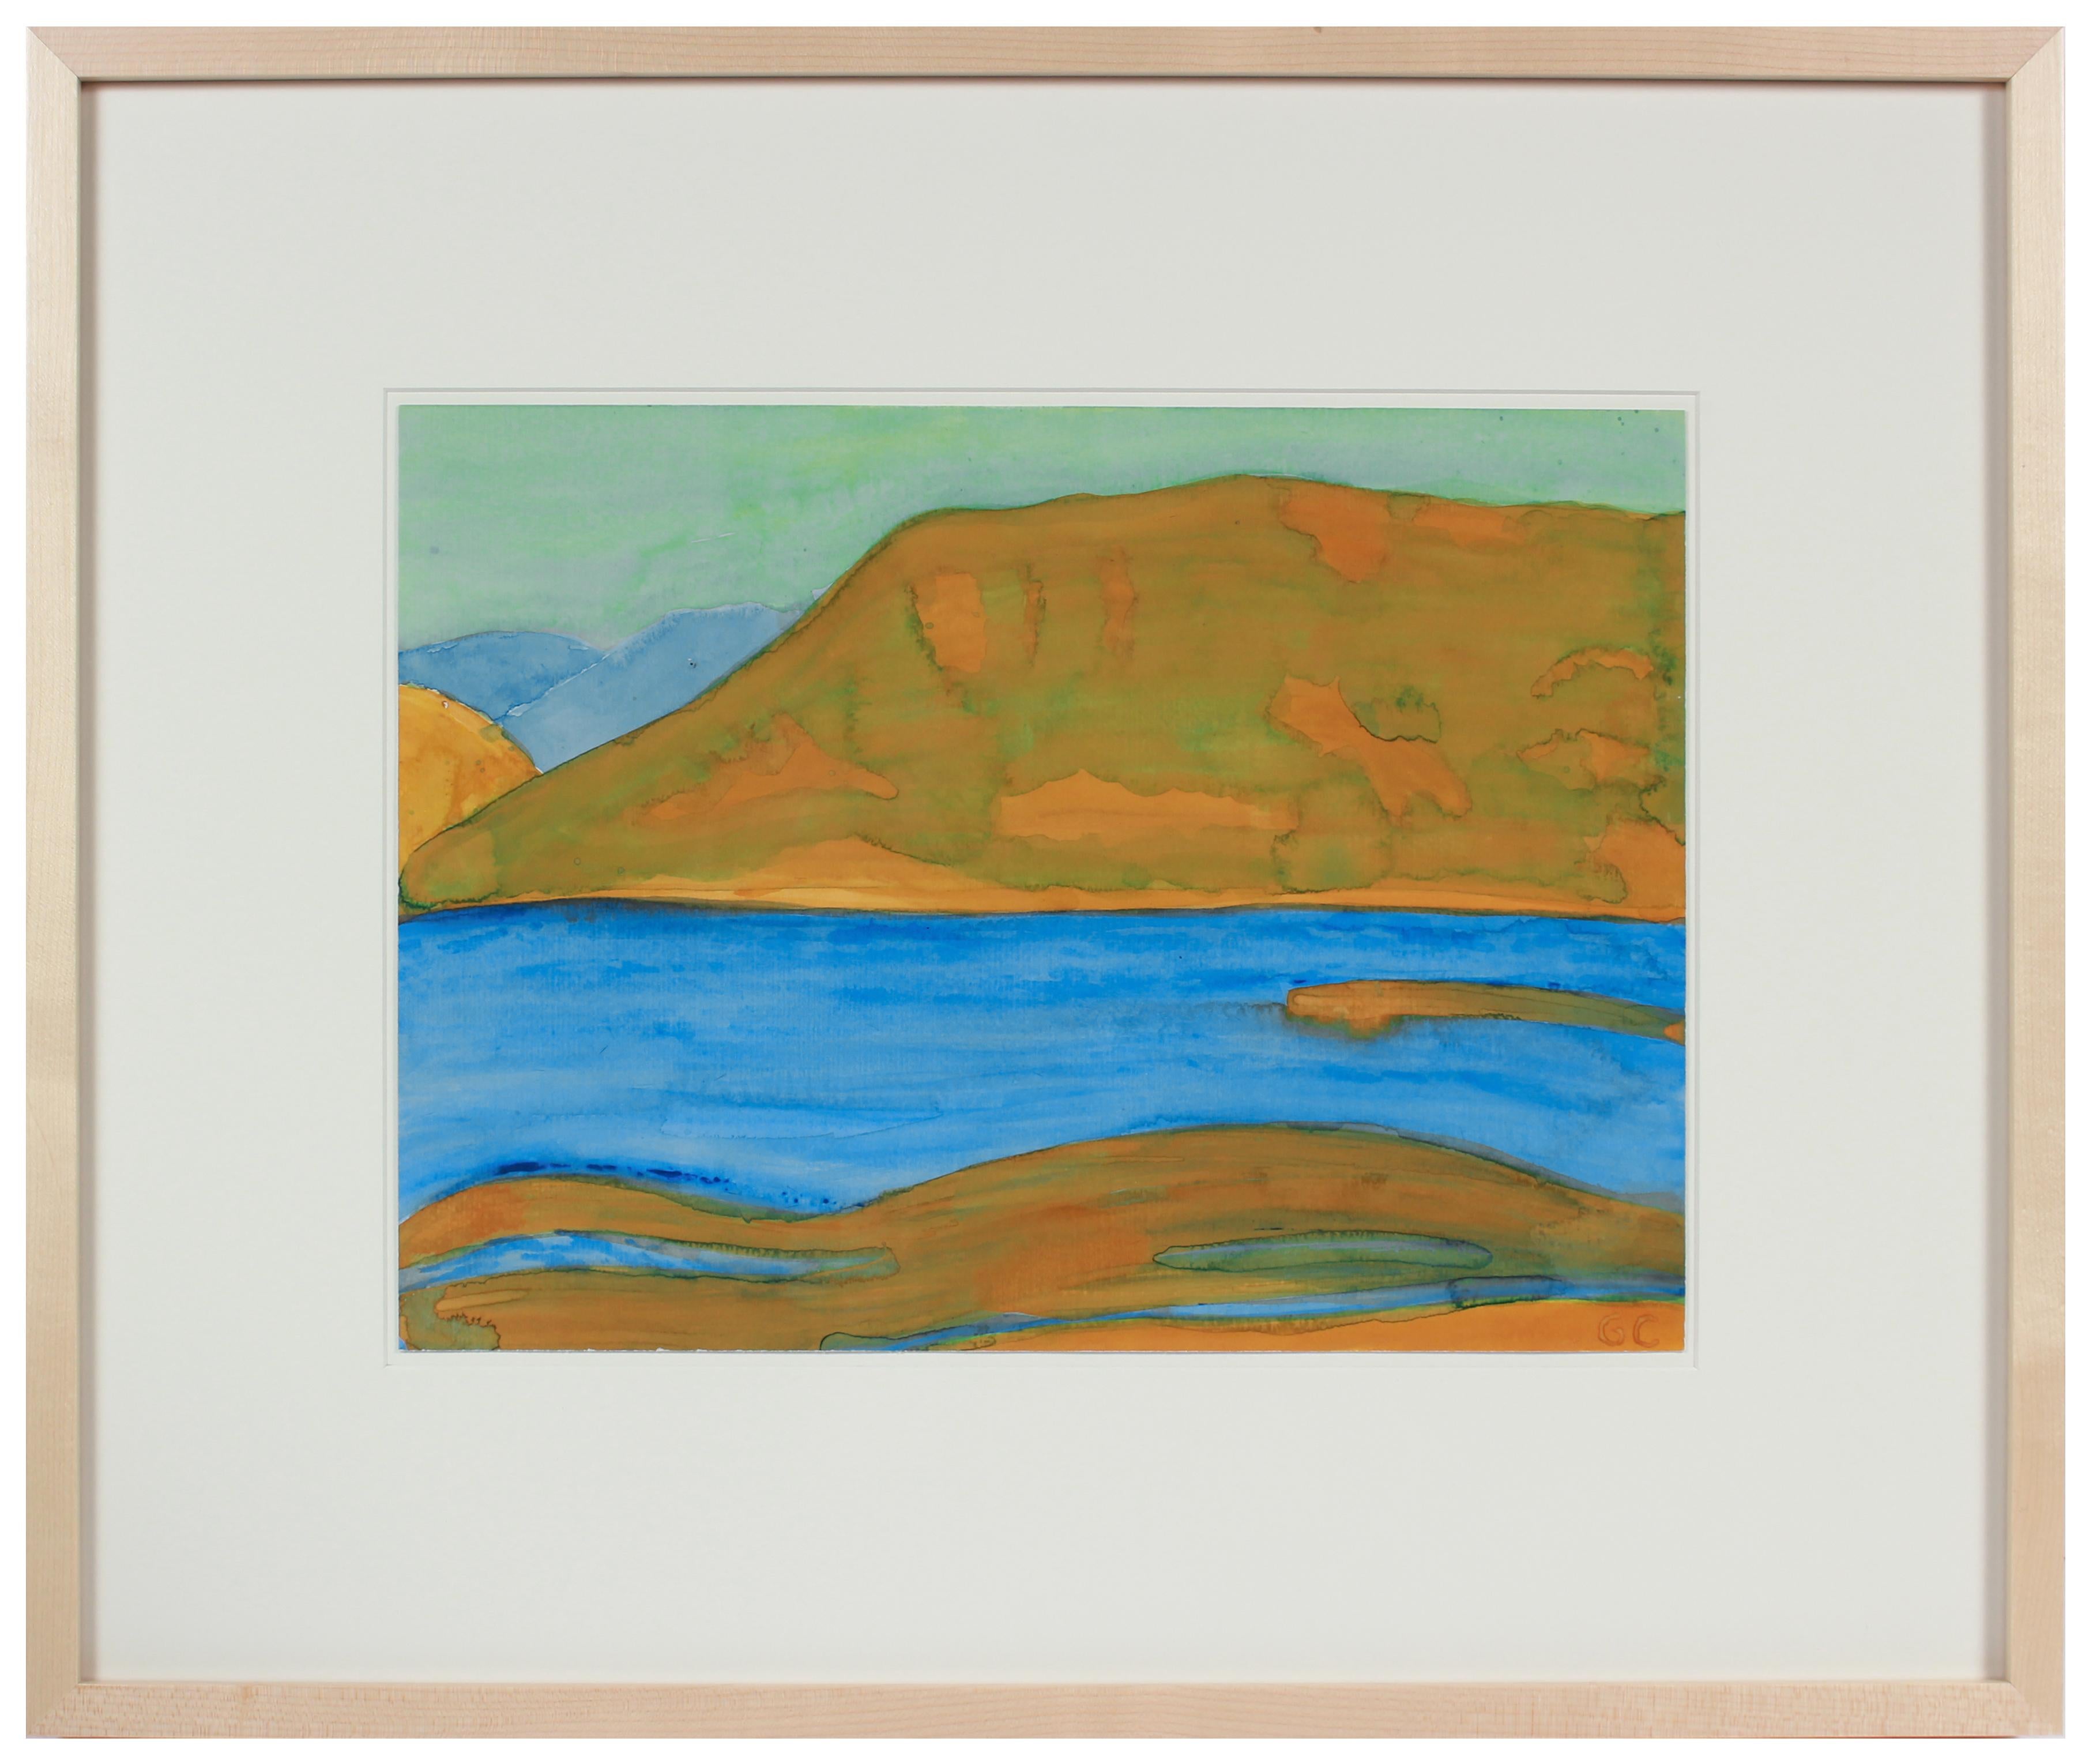 Gaétan Caron Landscape Art - "Mendocino Lake I" Ukiah Landscape in Gouache and Oil, 2016